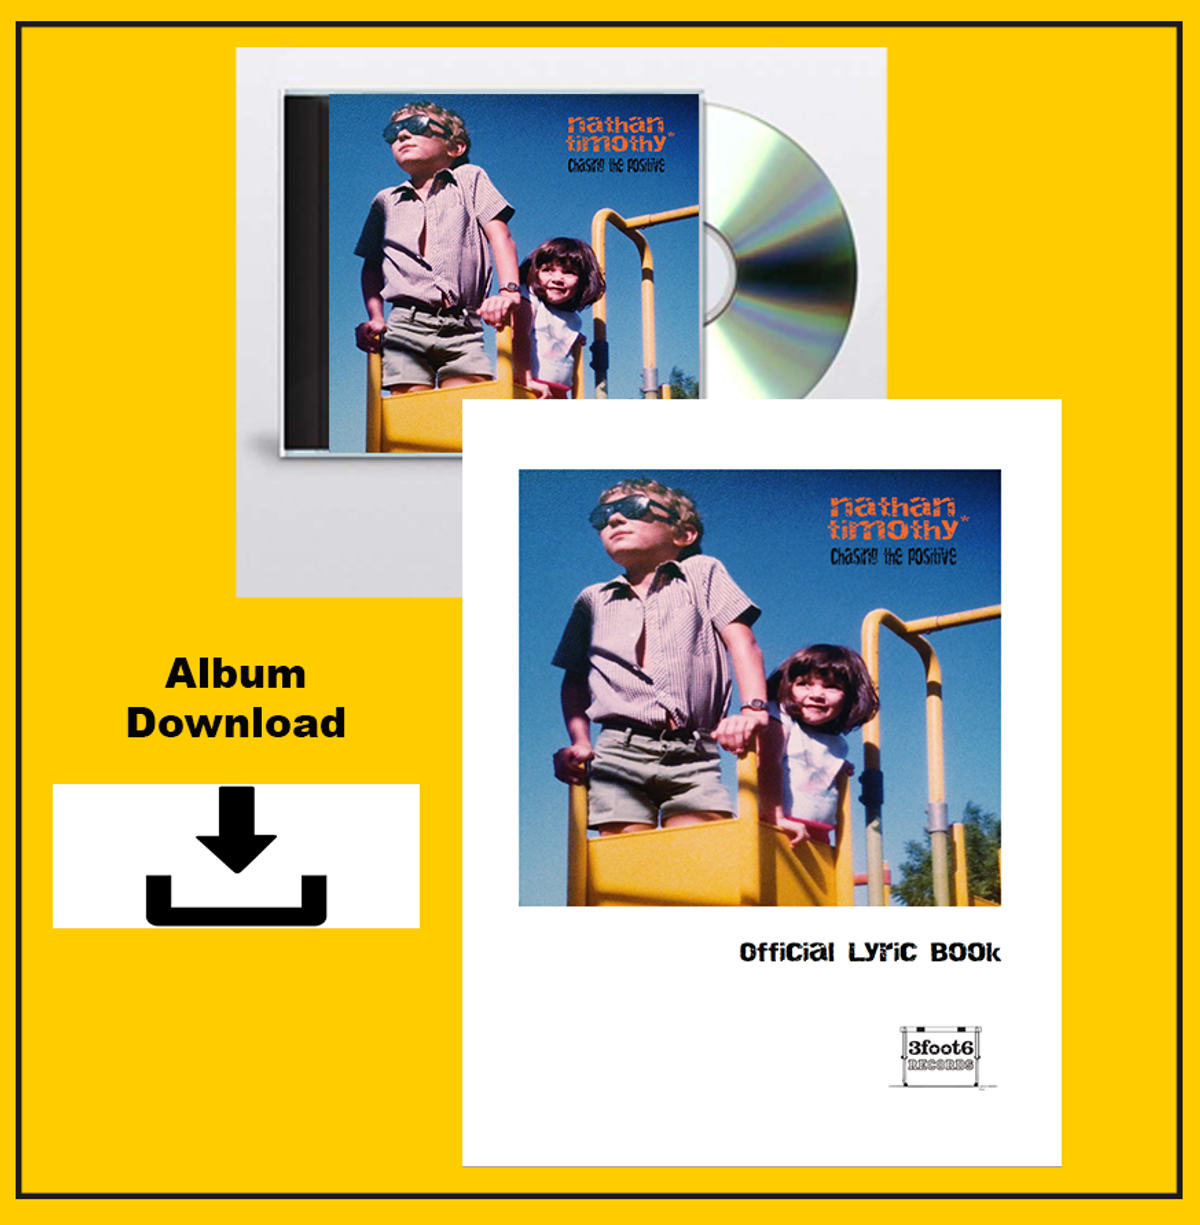 Chasing The Positive (CD), (HQ Digital Album Download) and (Lyric eBook) Bundle - nathan timothy*